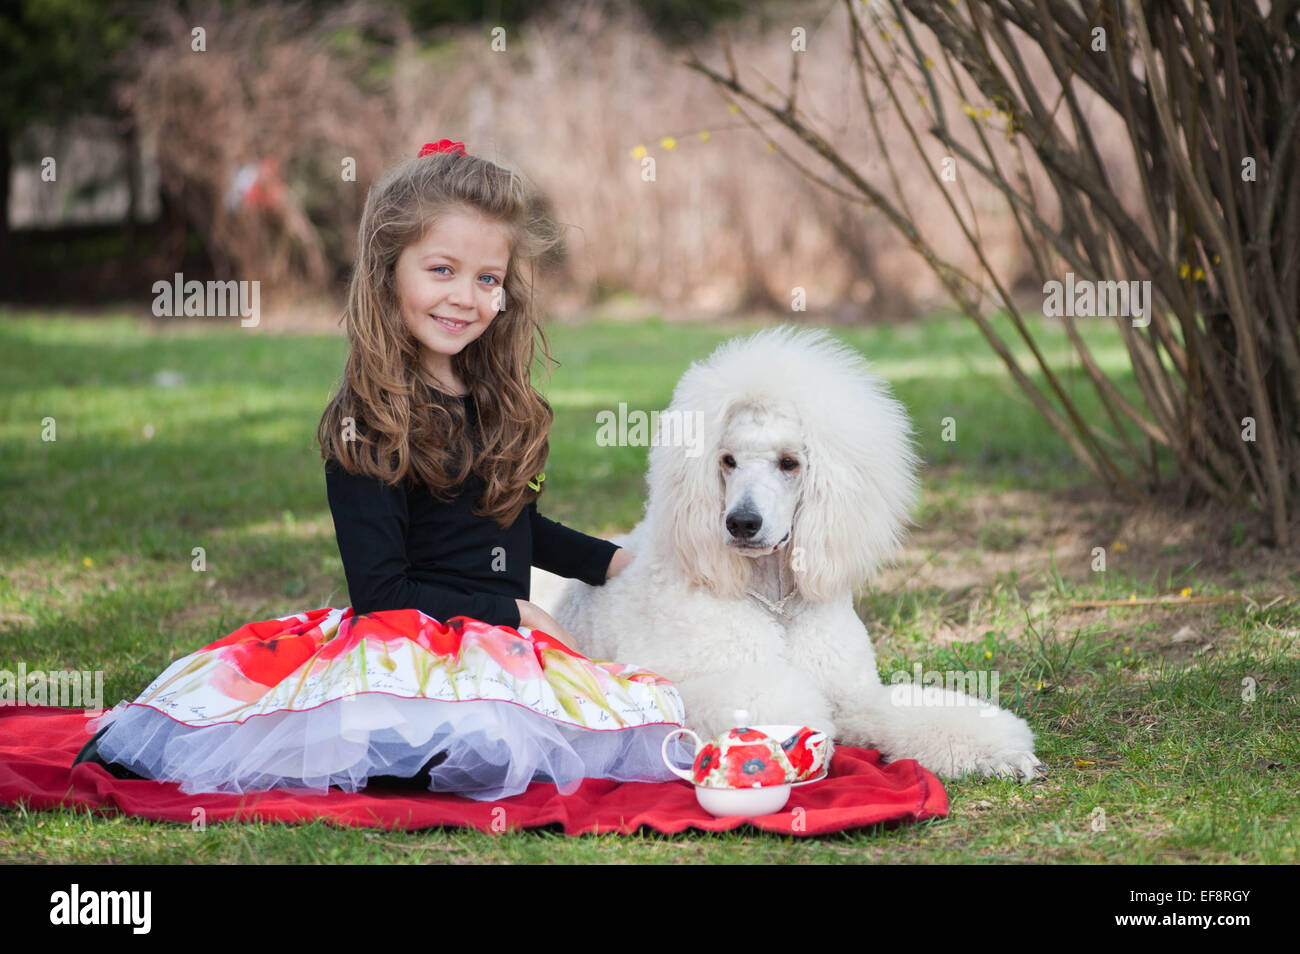 Portrait of Girl (6-7) et blanc poodle on picnic blanket Banque D'Images